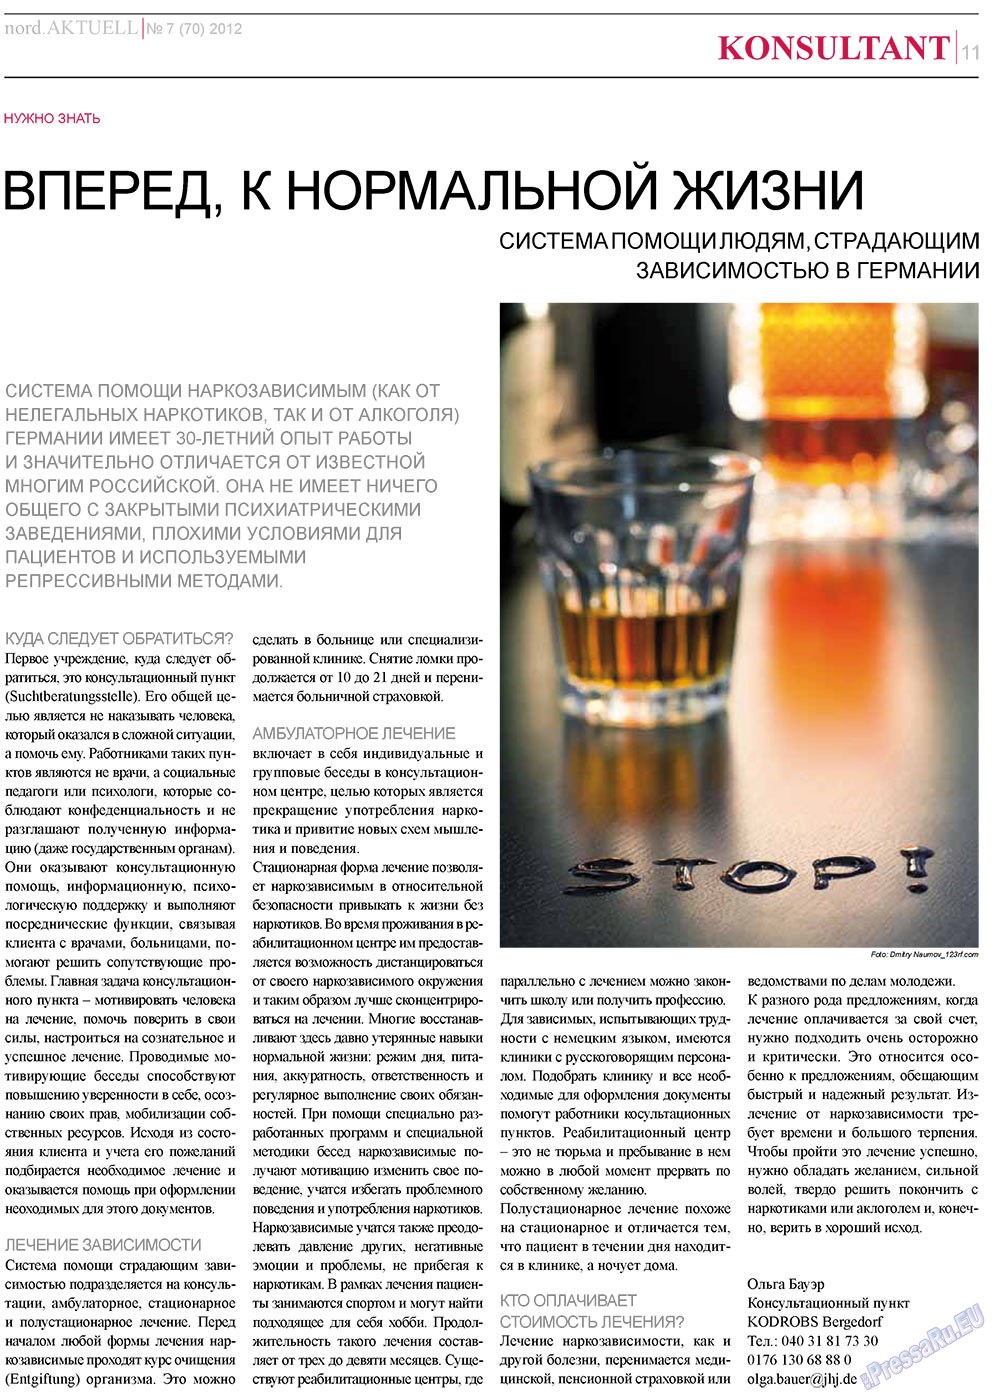 nord.Aktuell, газета. 2012 №7 стр.11